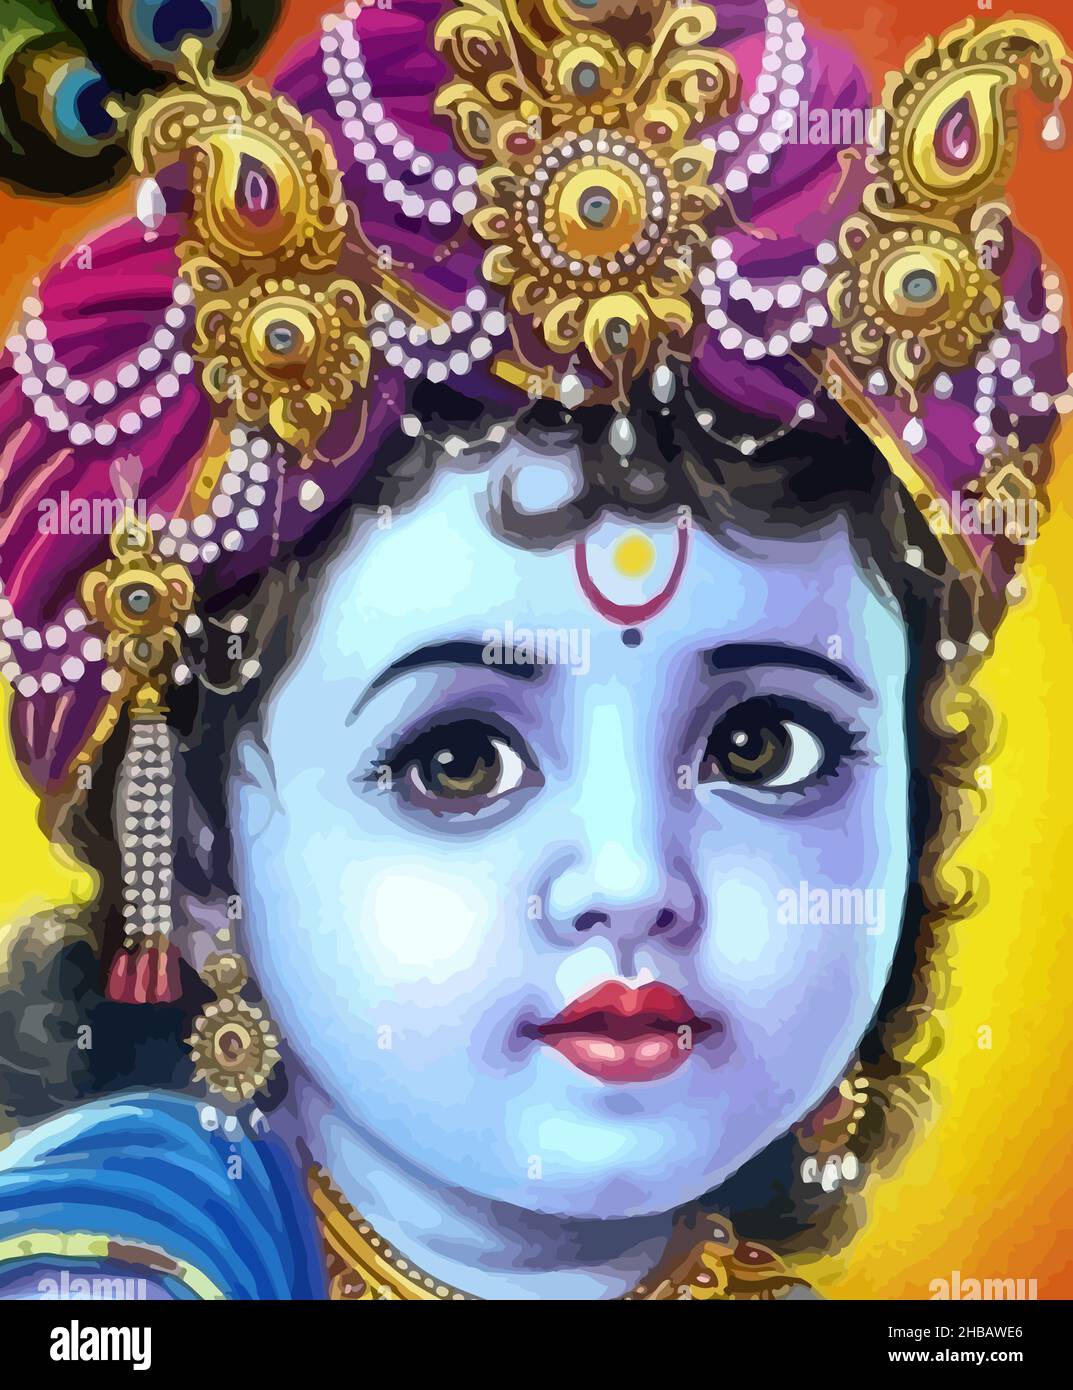 shri krishna govinda hinduismus Kultur Mythologie Illustration Stockfoto